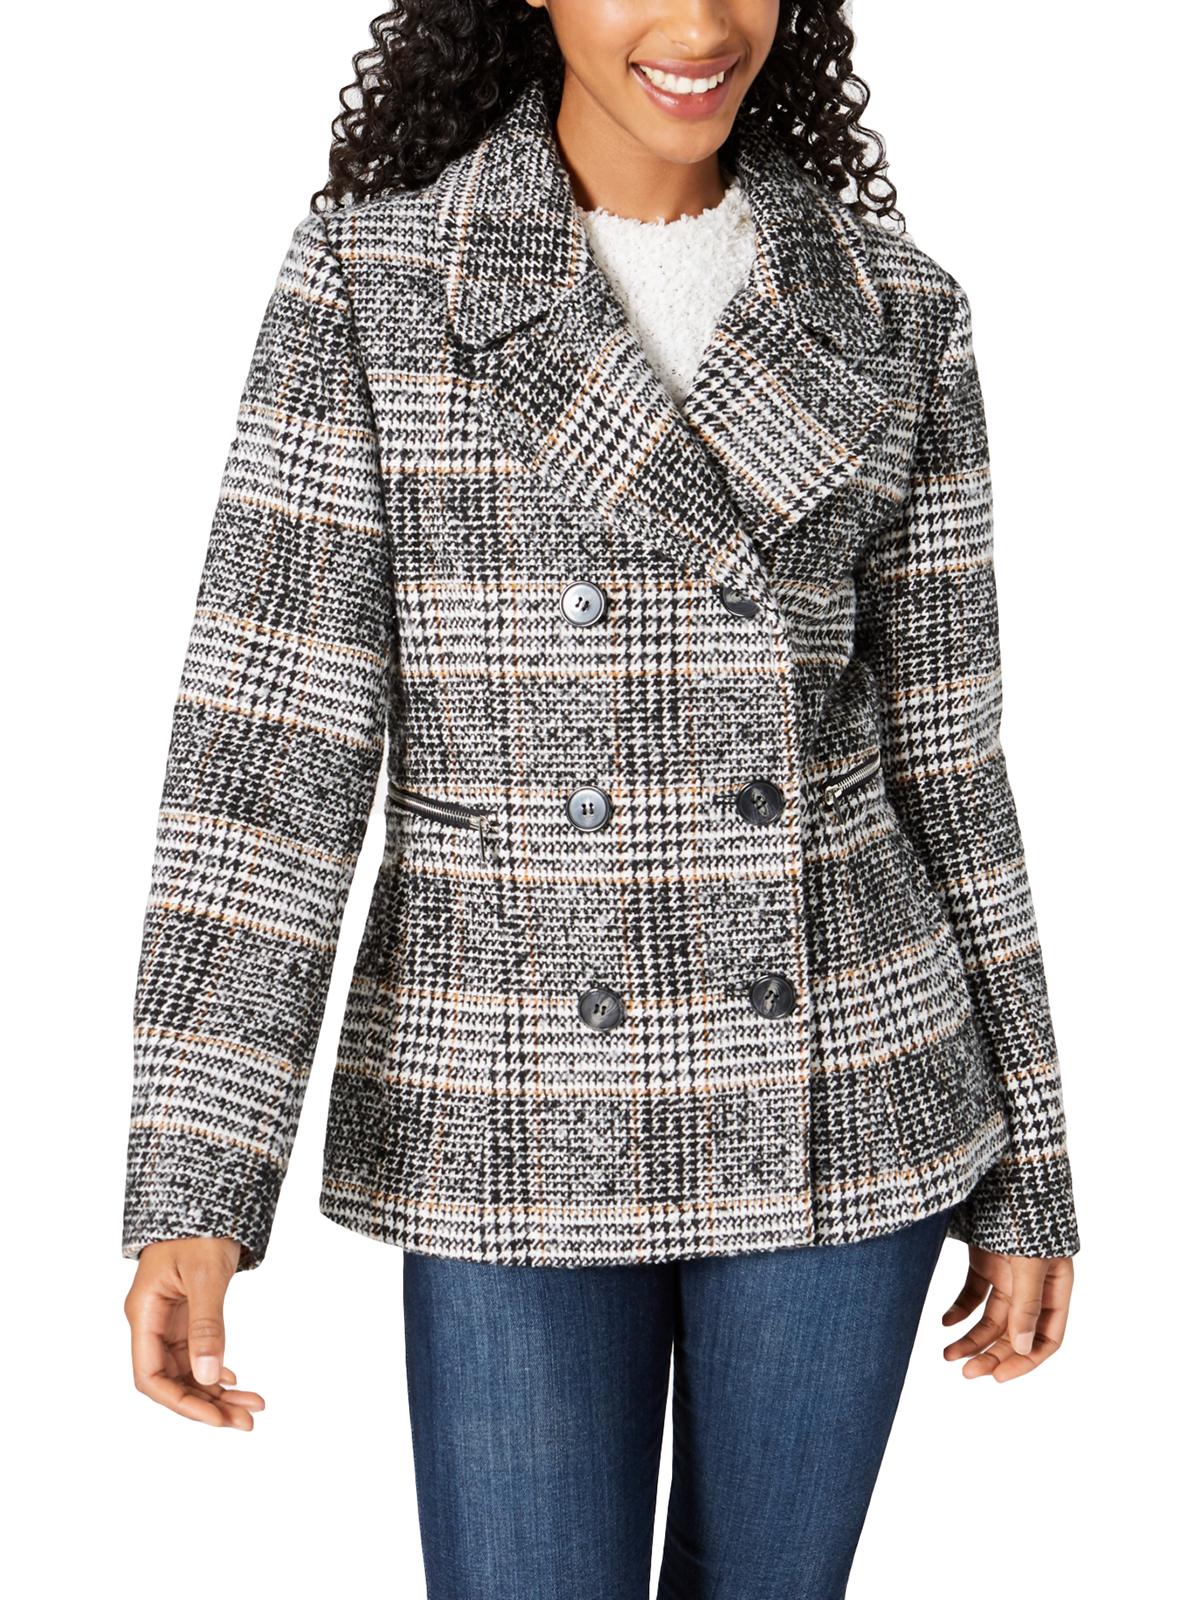 Maralyn & Me Womens Juniors Wool Blend Cold Weather Pea Coat - image 1 of 4